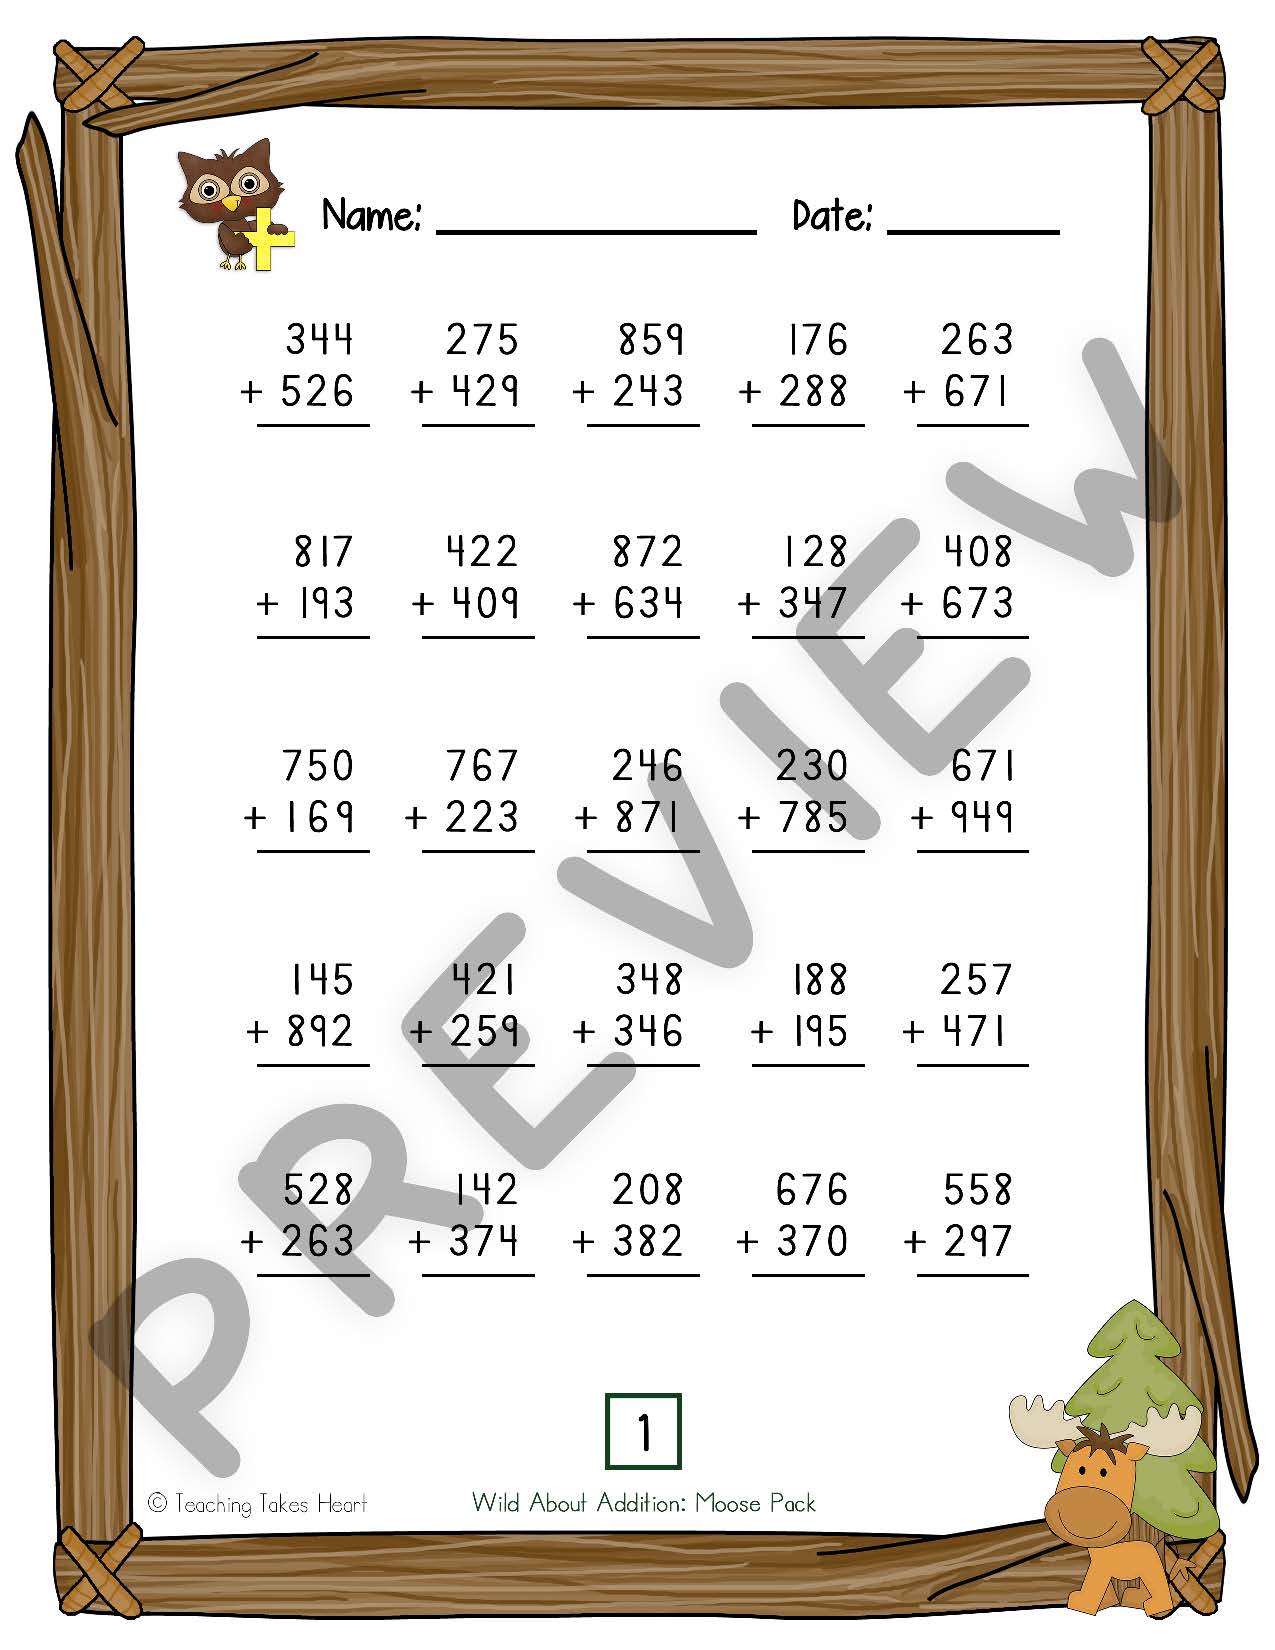 otter-creek-math-worksheets